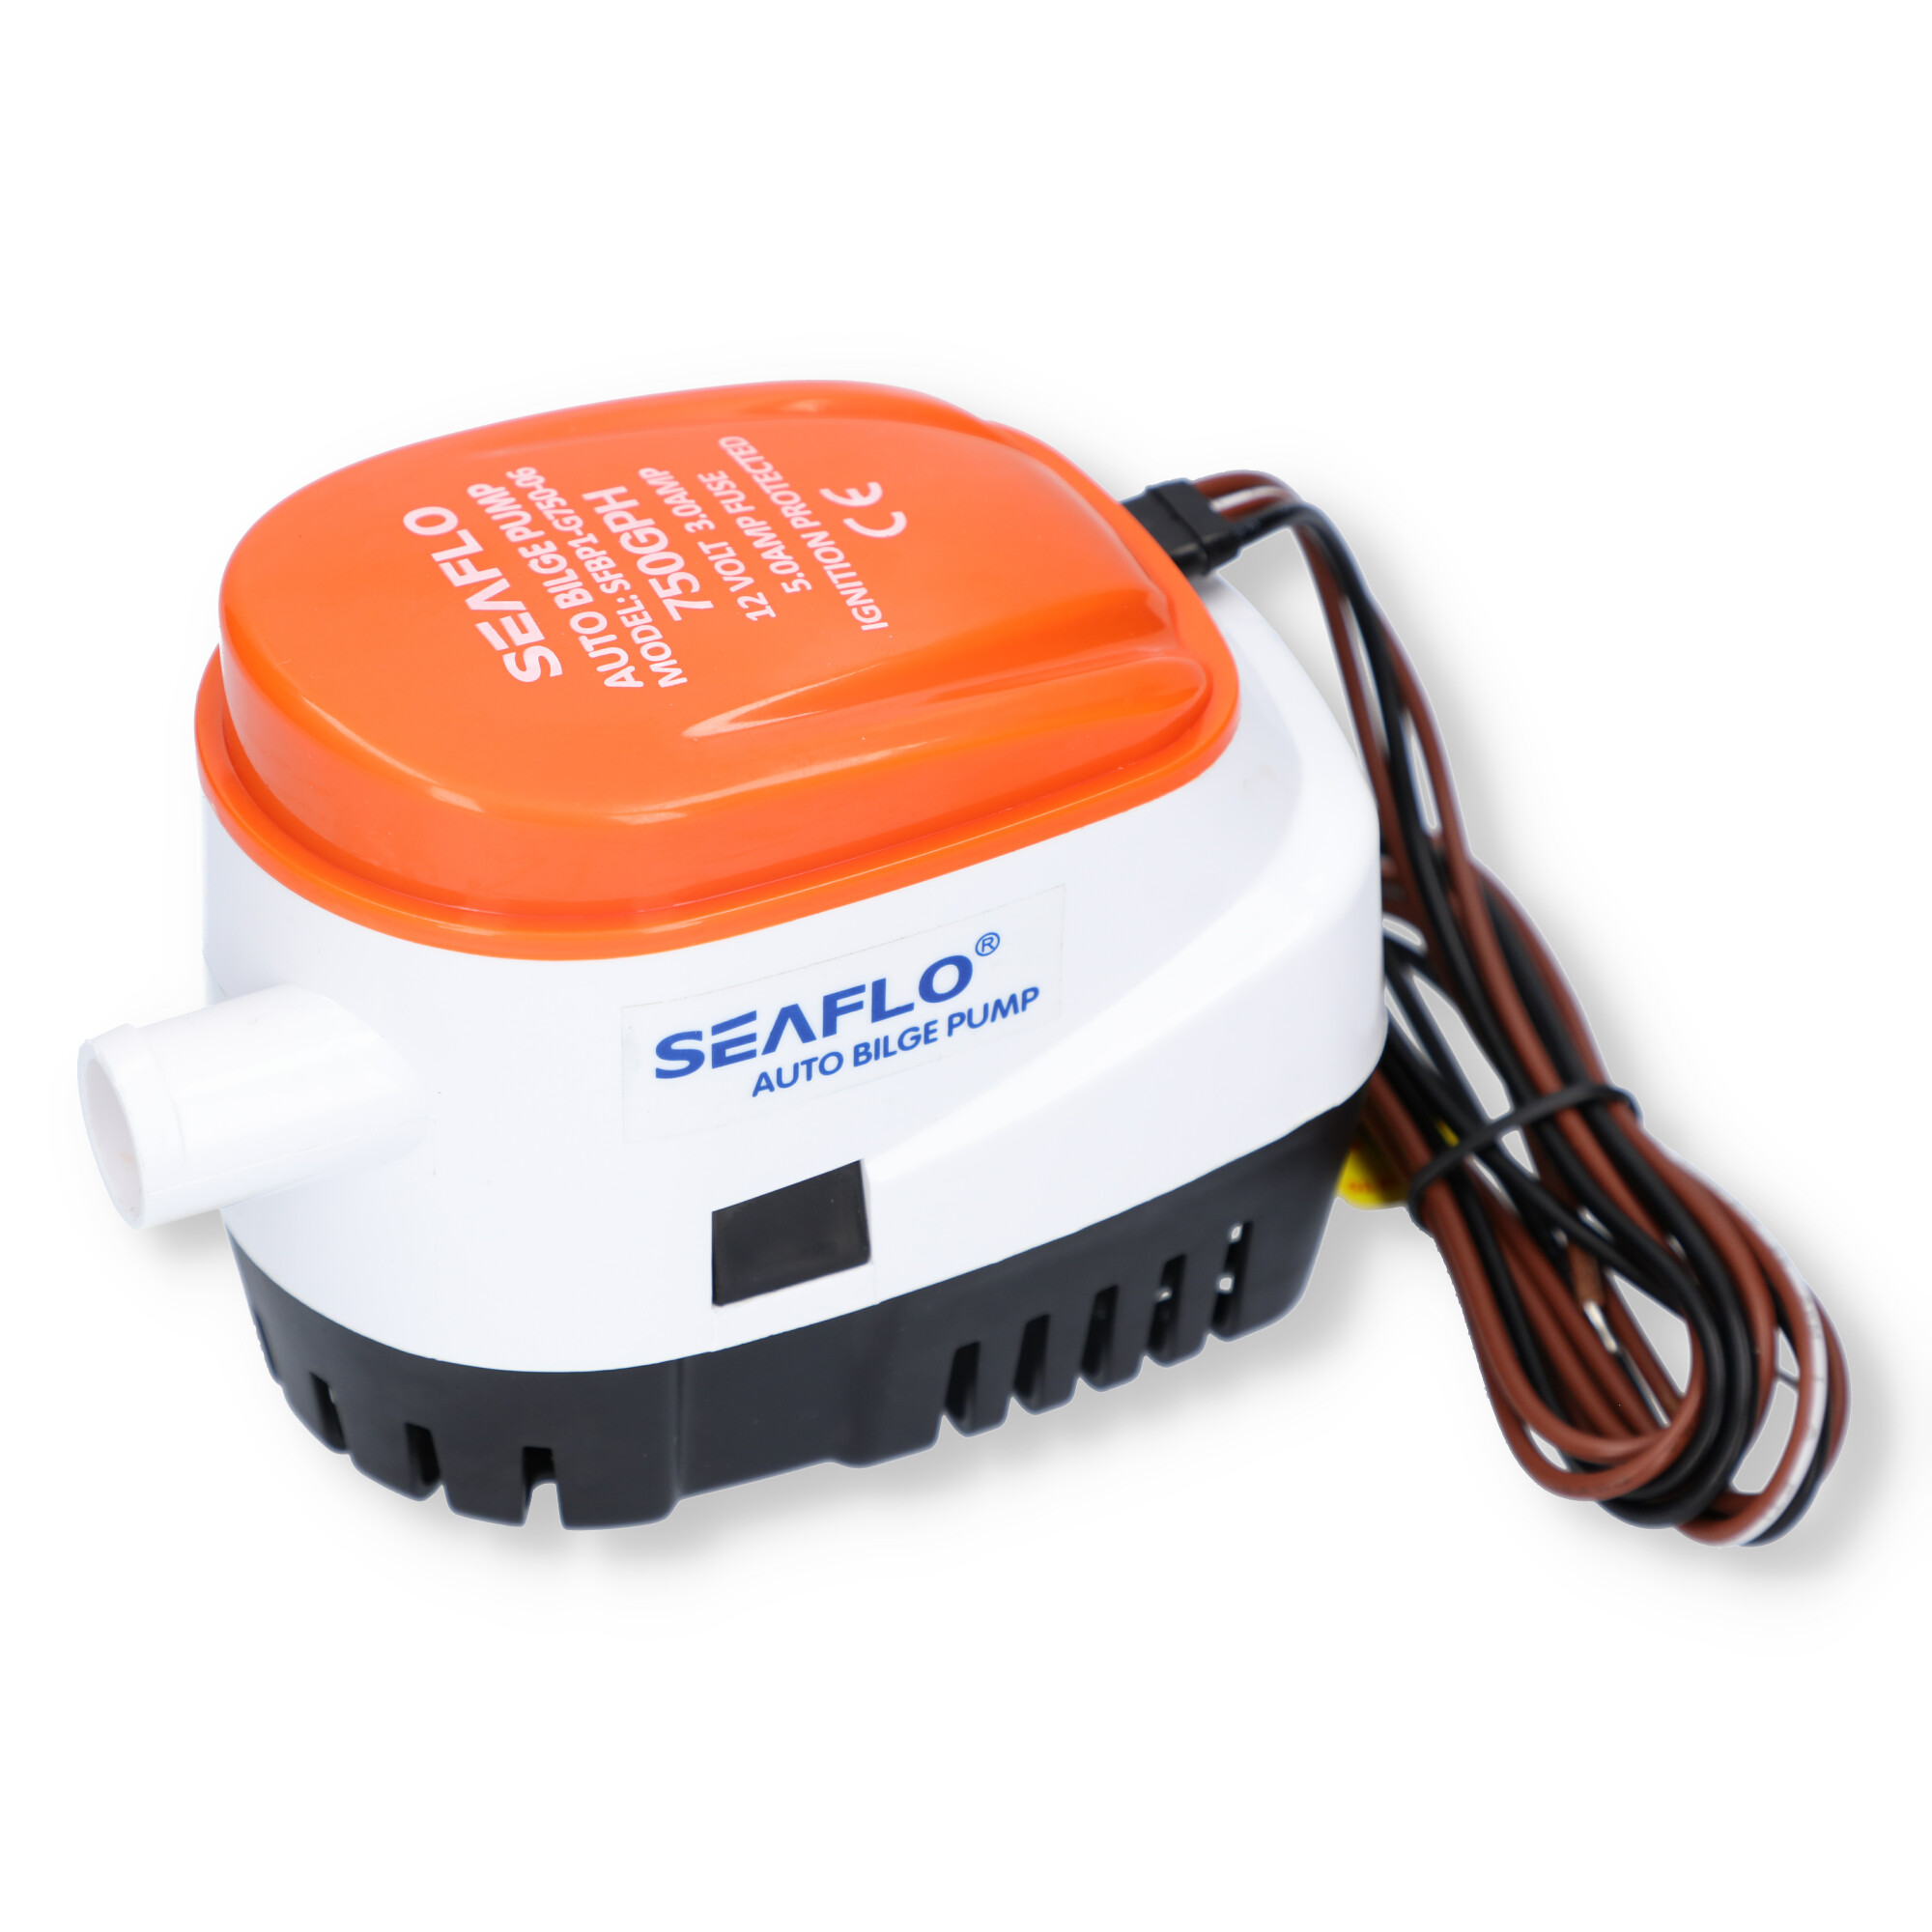 SEAFLO ® Automatik Bilge Pumpe 12V Sahara 750